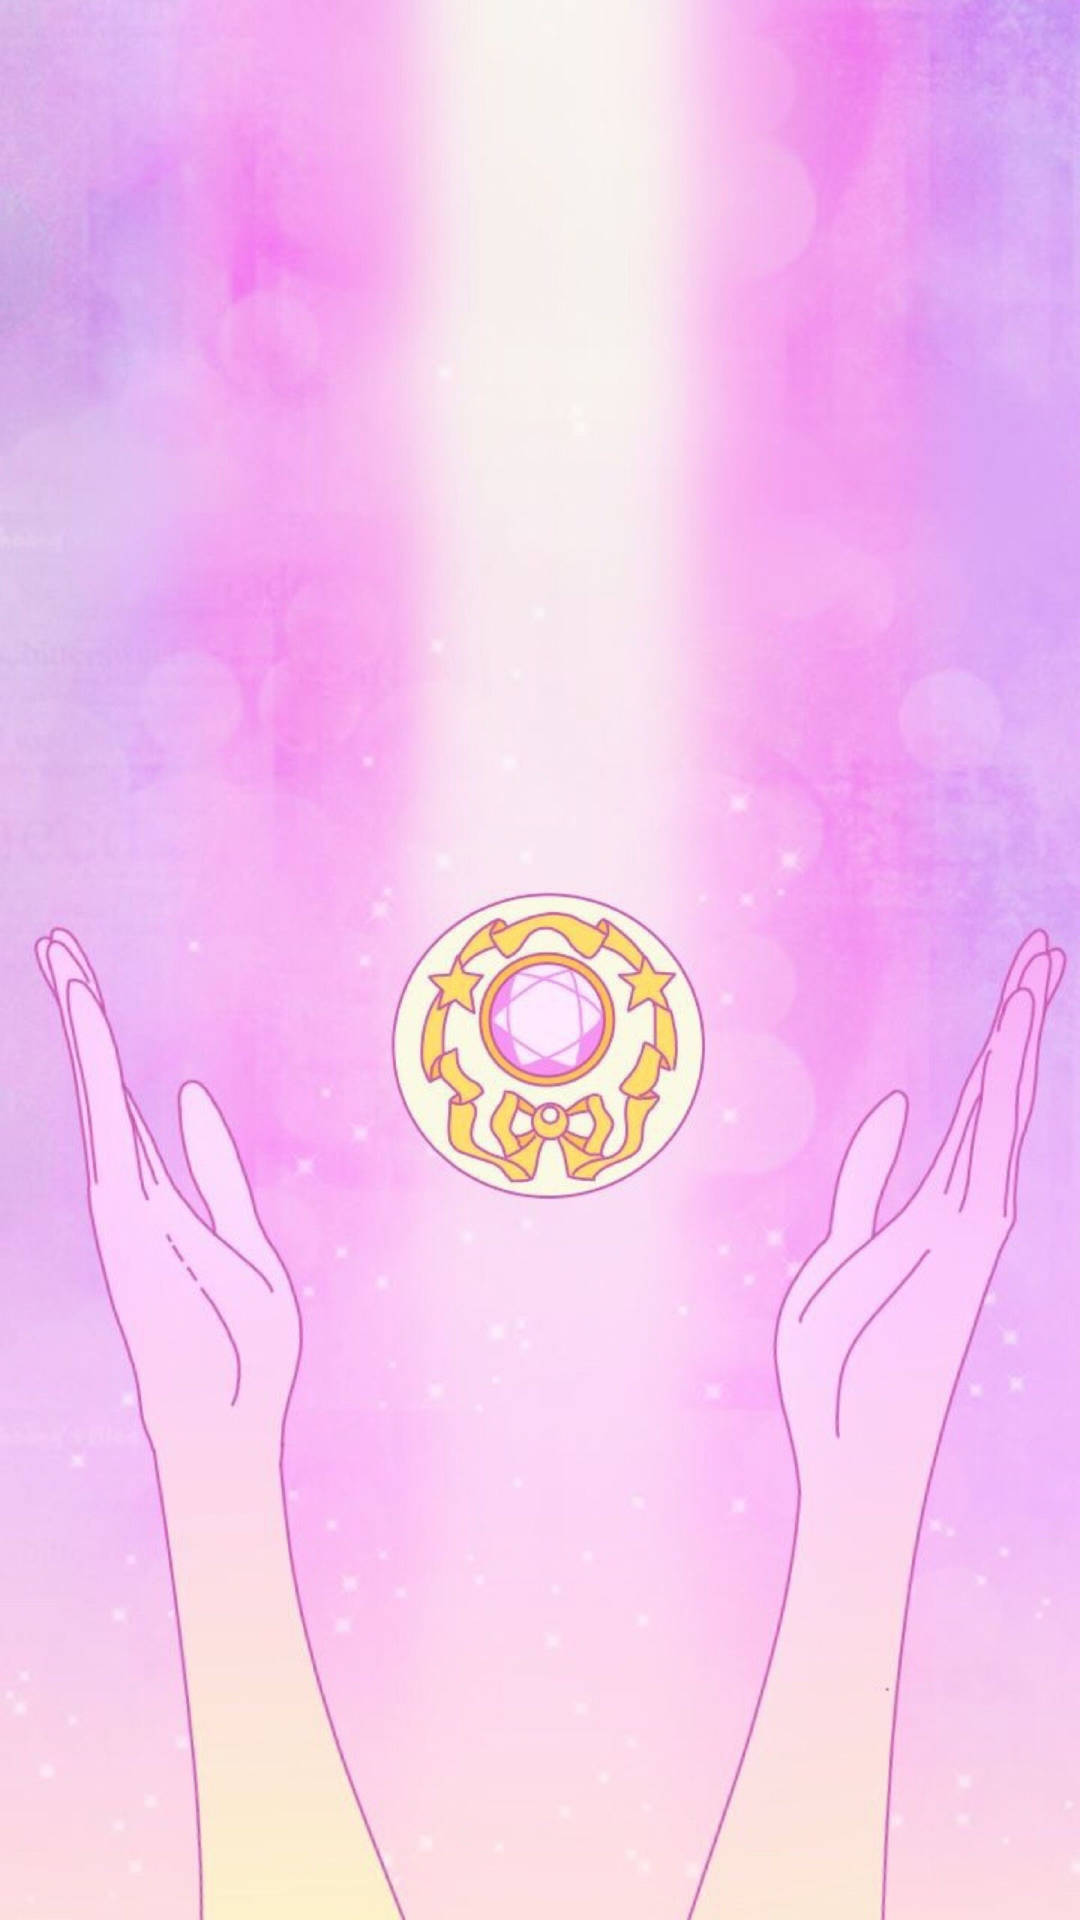 Hands Reaching For A Jewel Sailor Moon iPhone Wallpaper